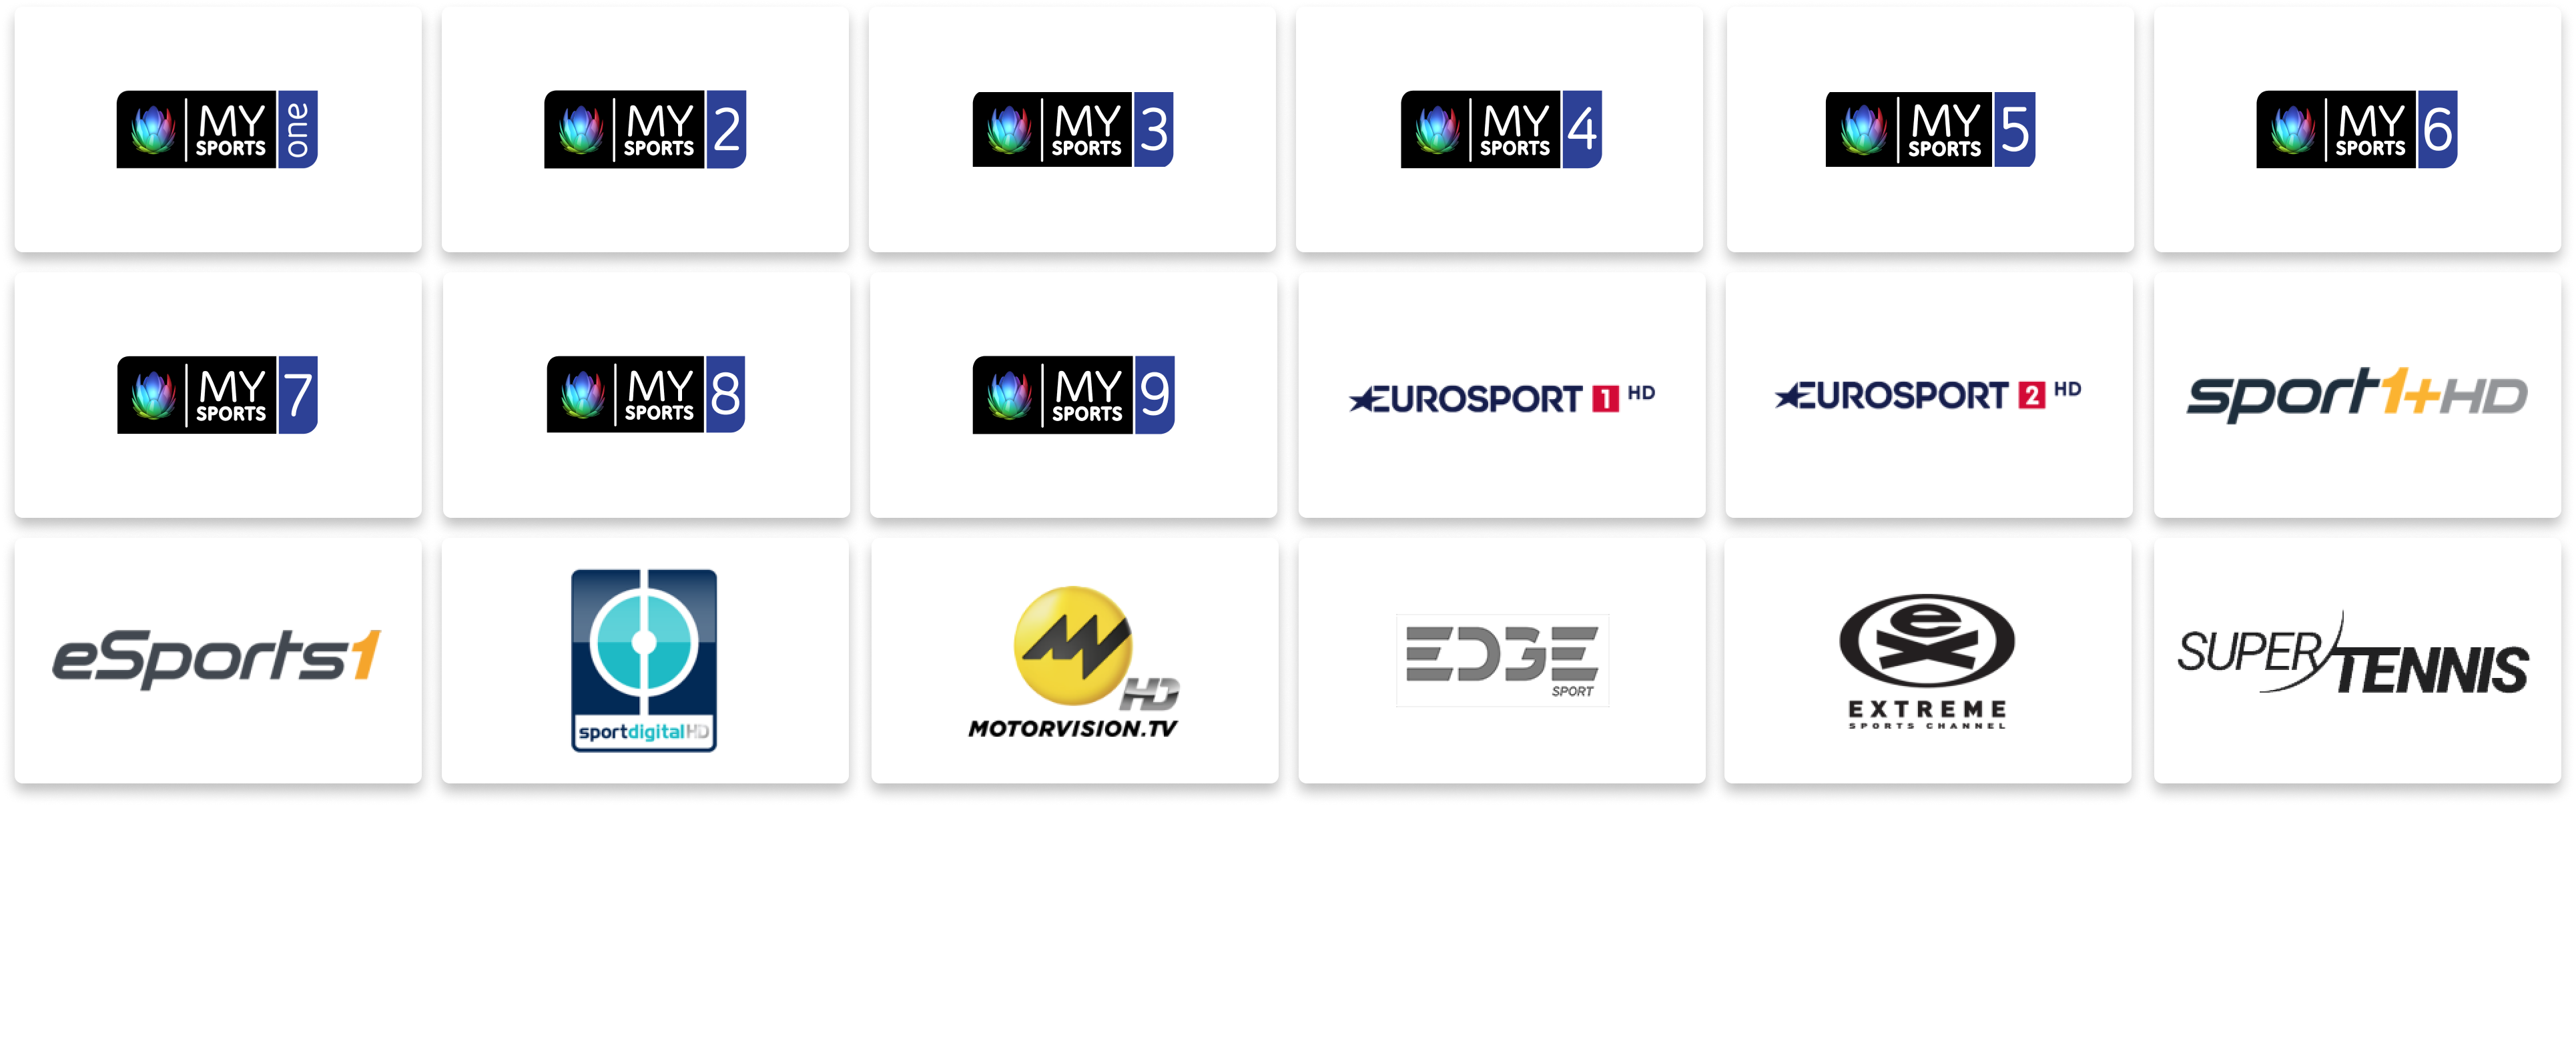 Mysports-channels-DE1